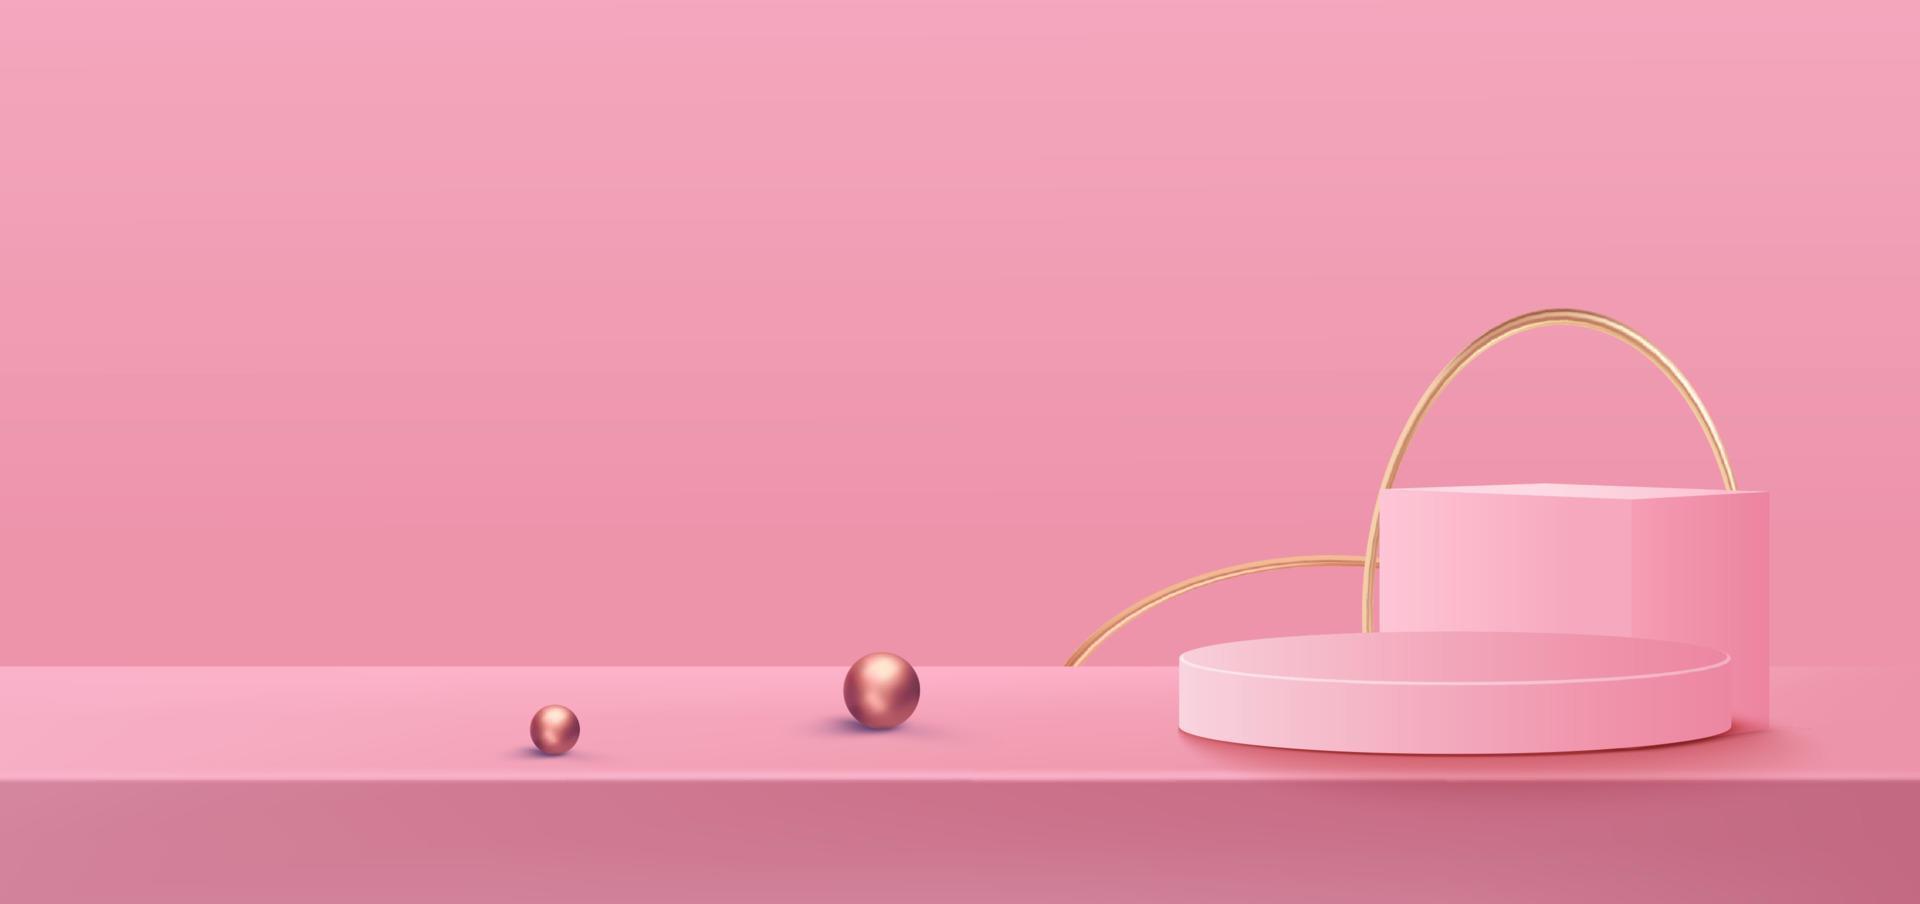 Conceito de vetor de fundo de pódio rosa 3D, adequado para design de fundo romântico, modelo, banner de dia dos namorados